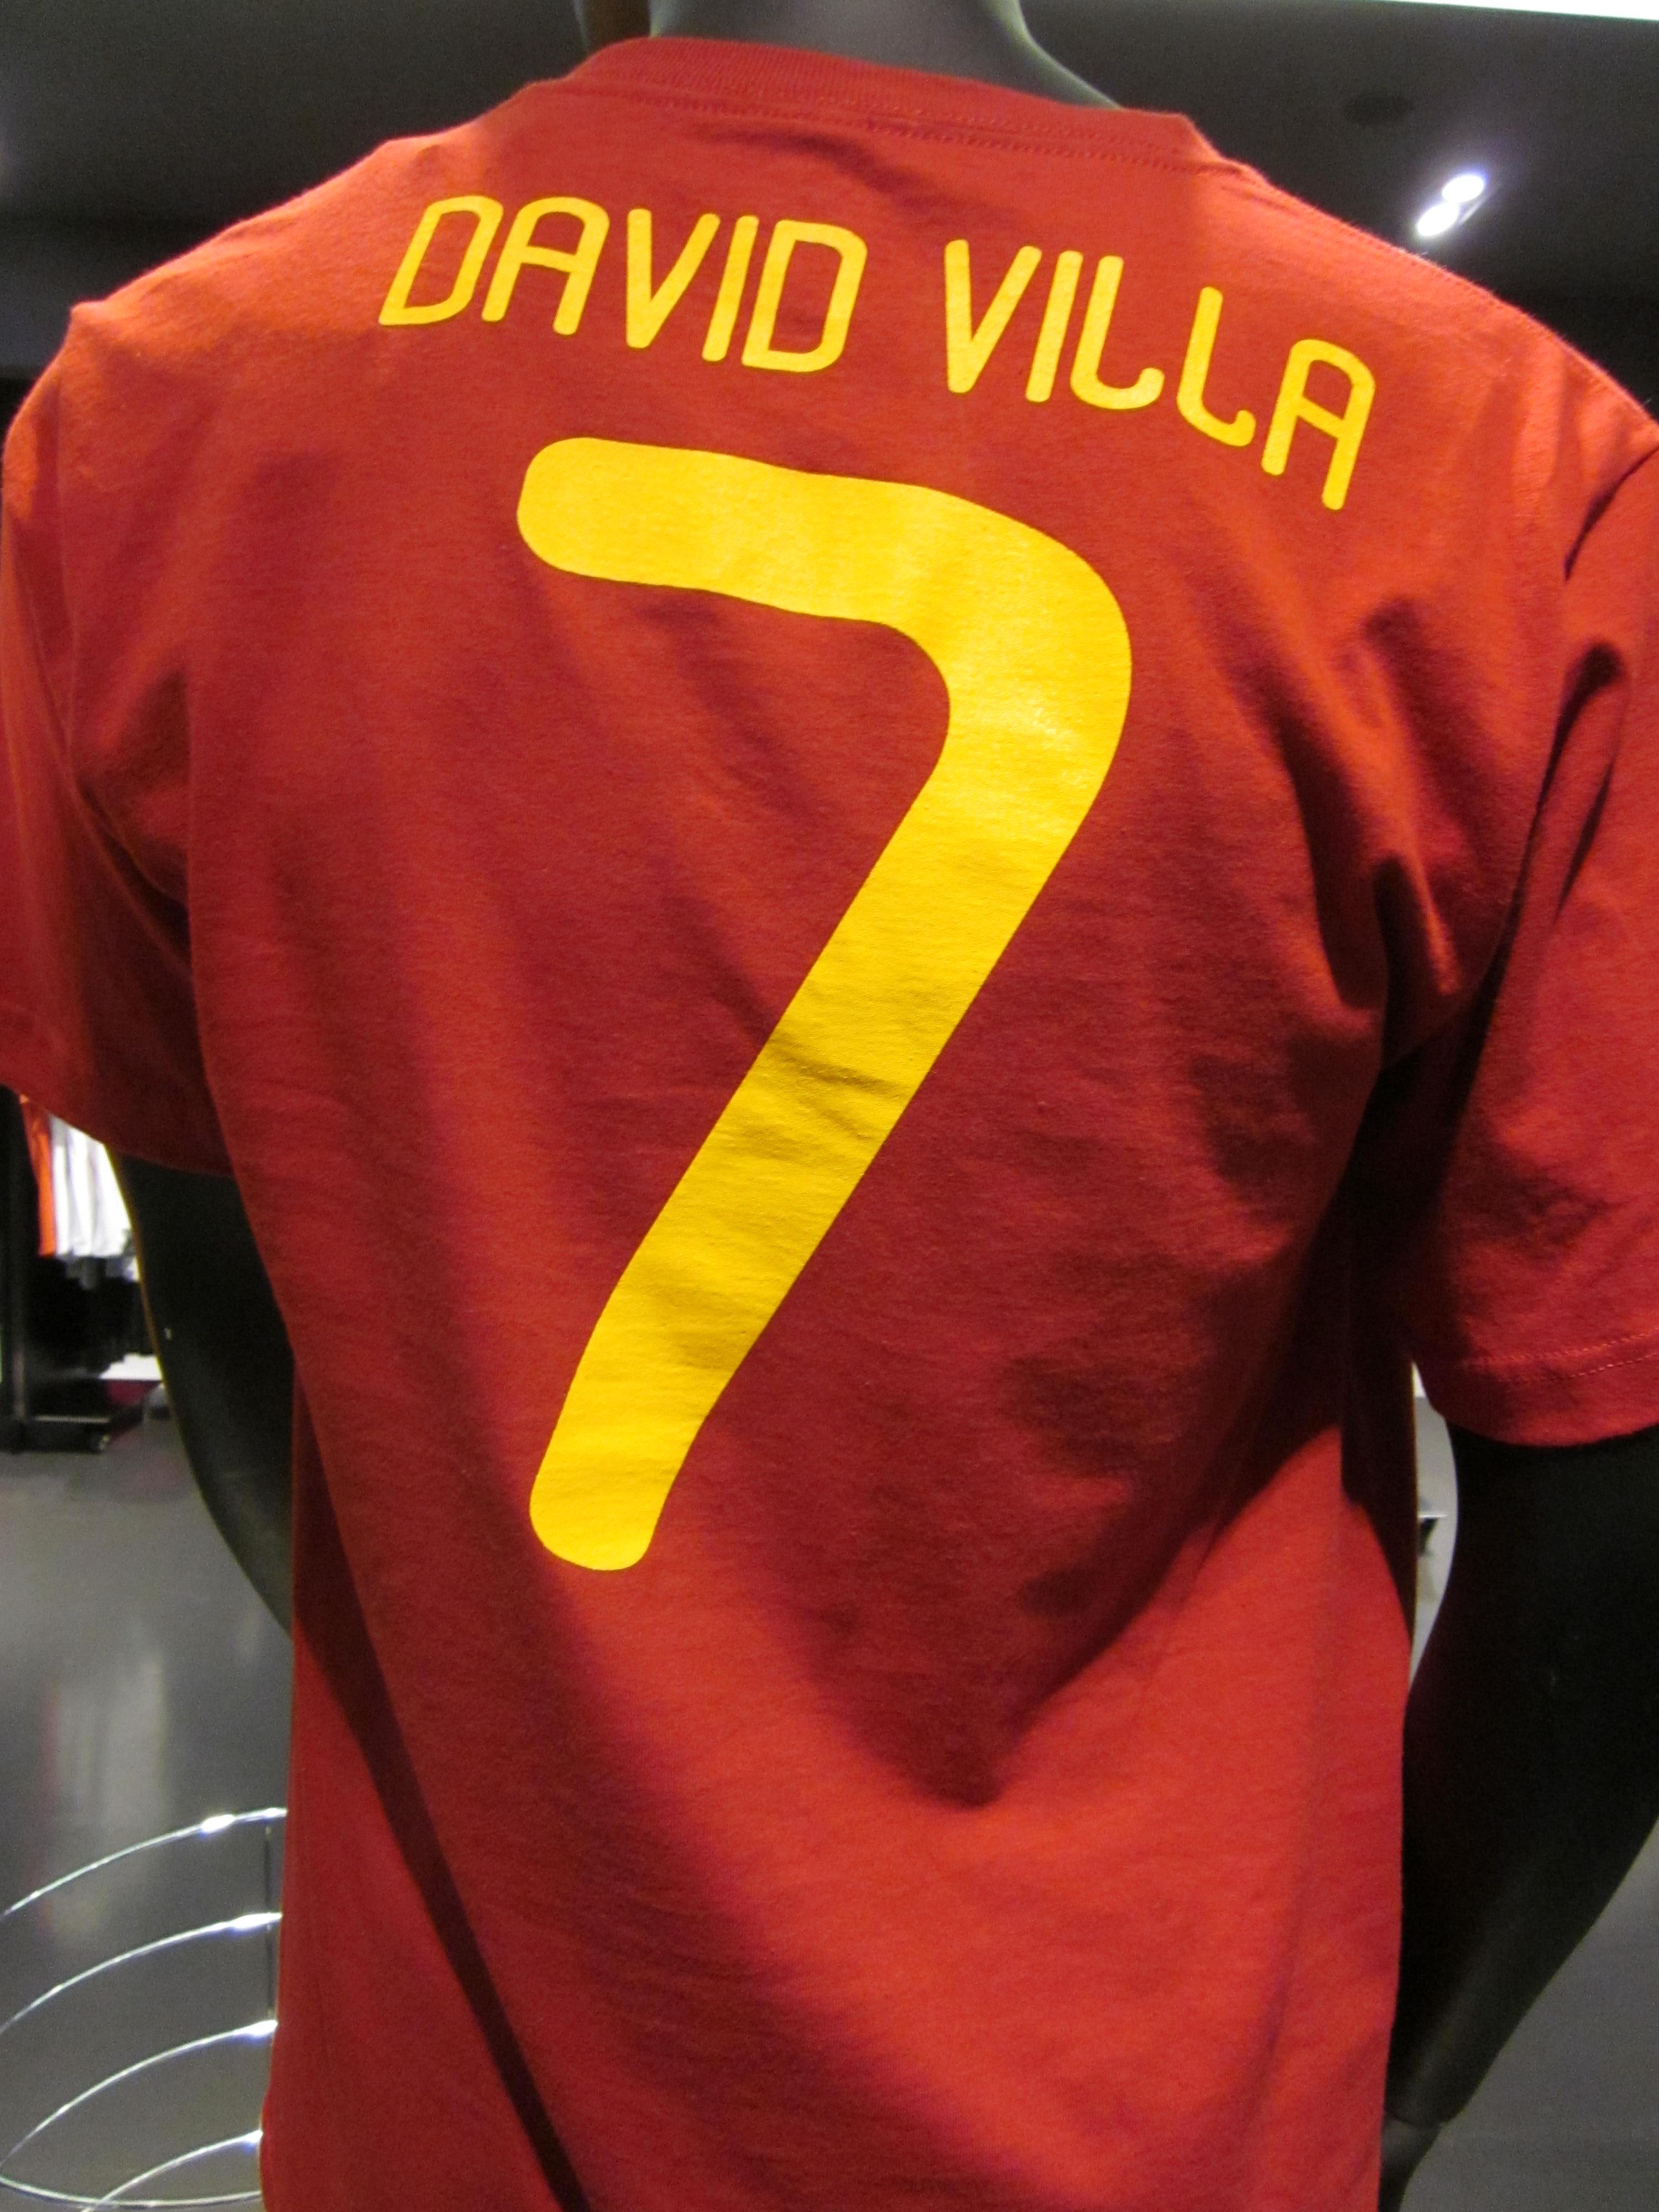 File:Adidas David Villa shirt rear.JPG 